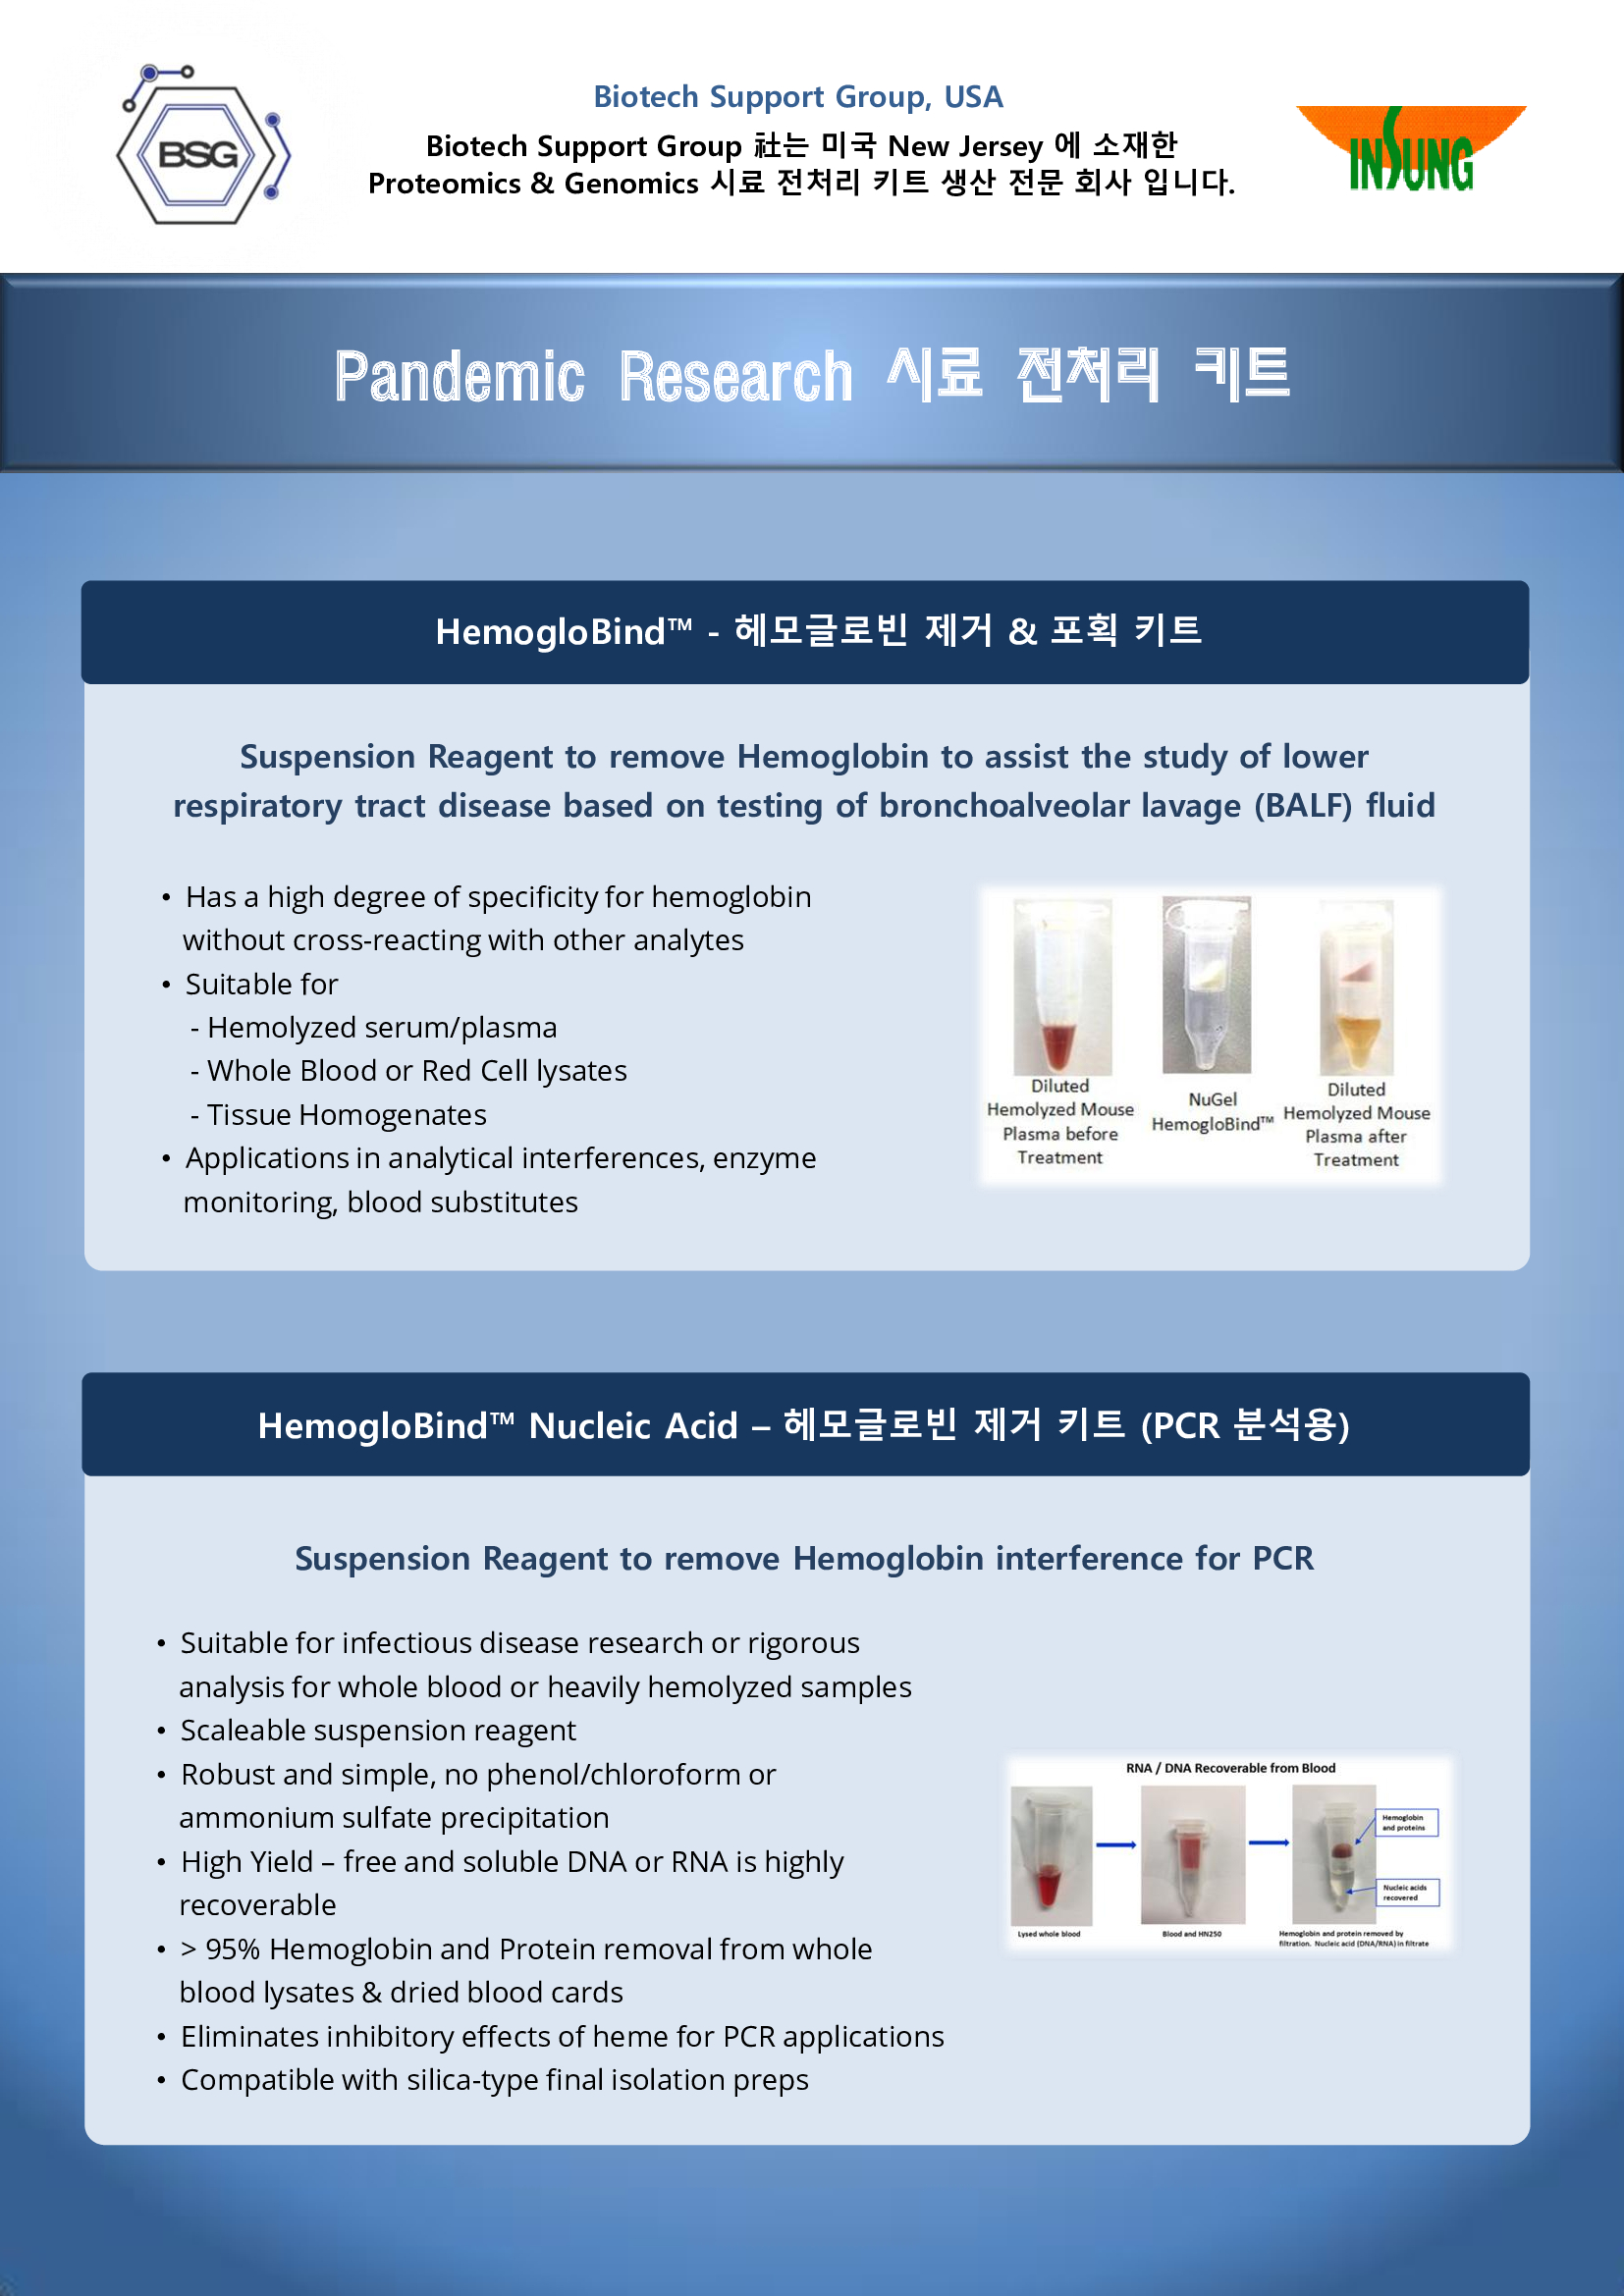 BSG_Pandemic Research 소개 자료 (1-3).jpg